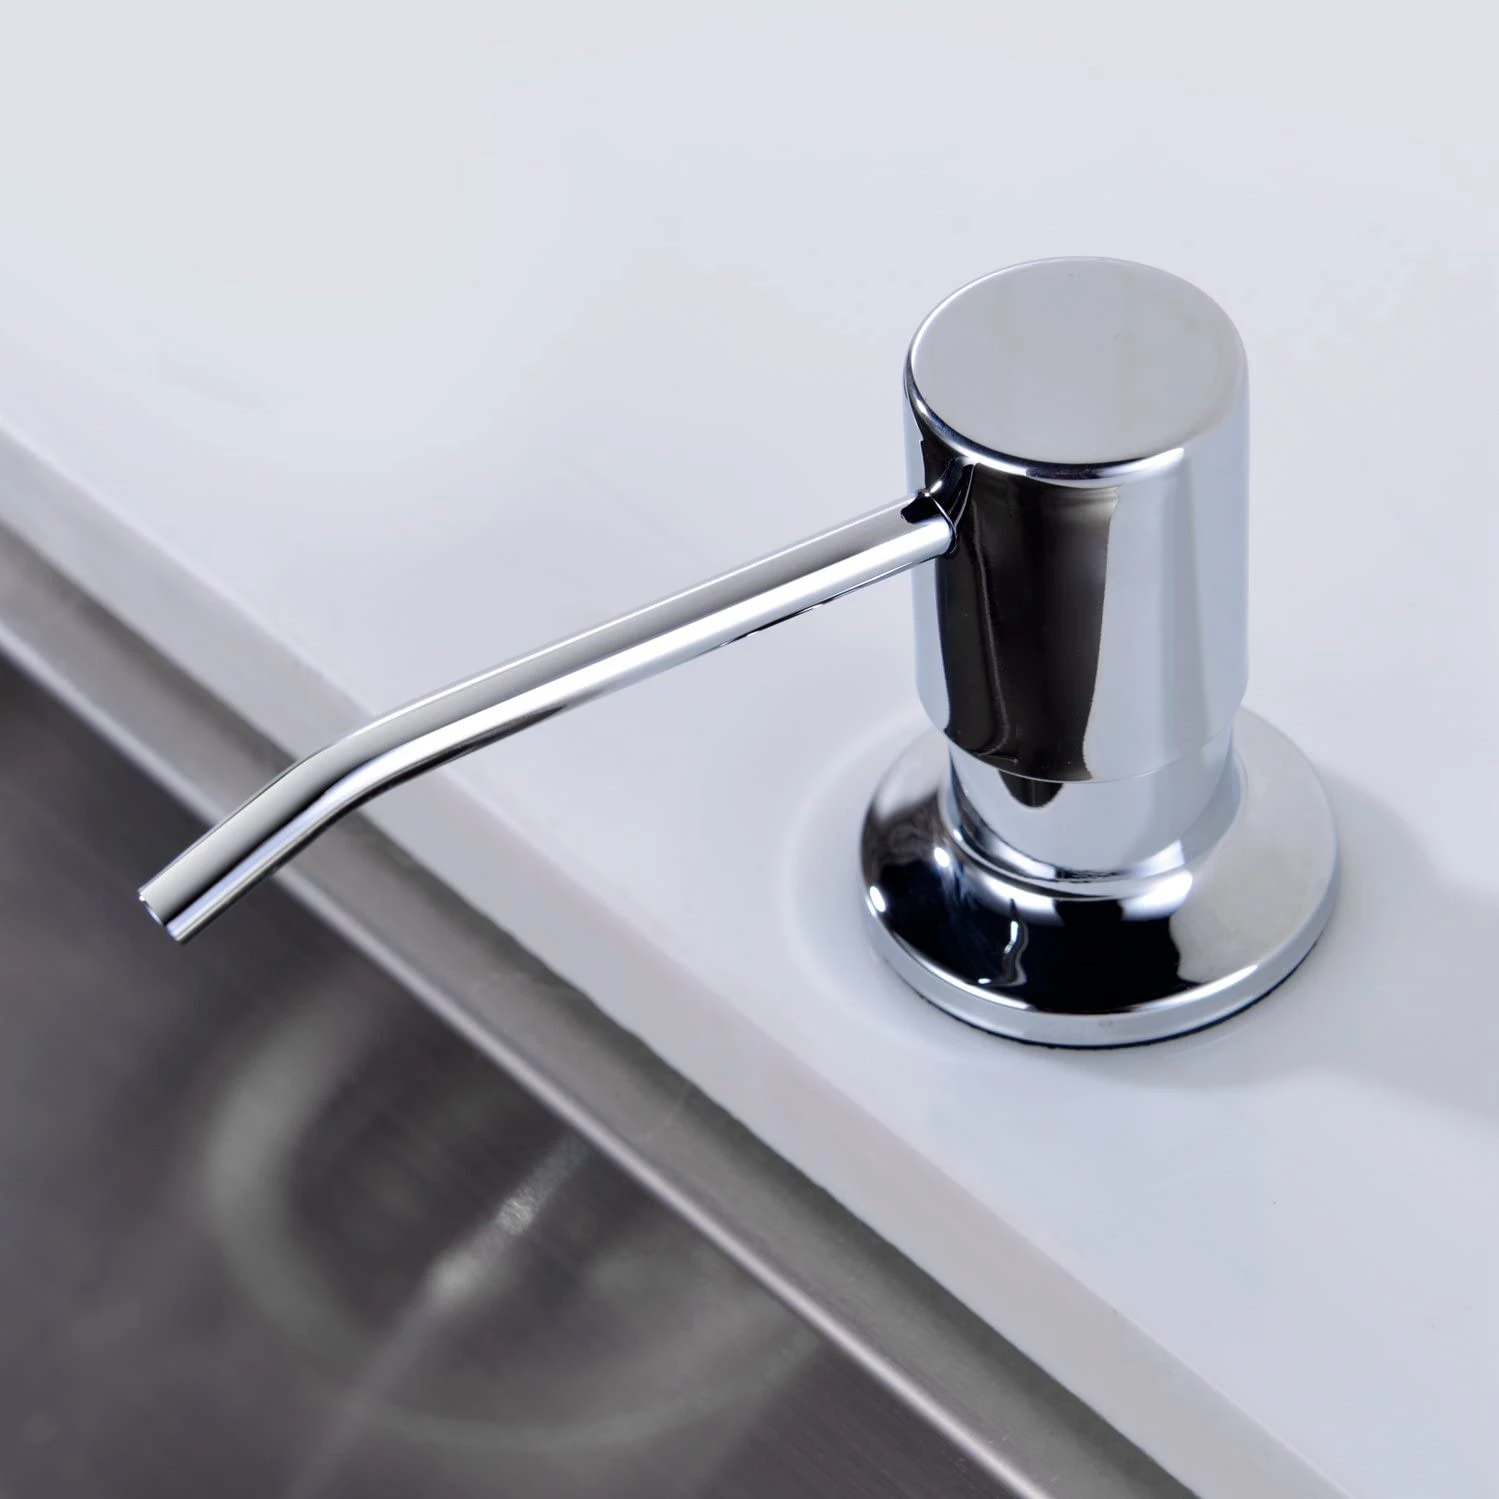 Sink Soap Dispenser, Kitchen Soap Dispenser, Built in Desk Mount Liquid Lotion Kitchen Countertop Soap Dispenser, Large Capacity 17 OZ Bottle,Chrome - B0BSGQ26W5